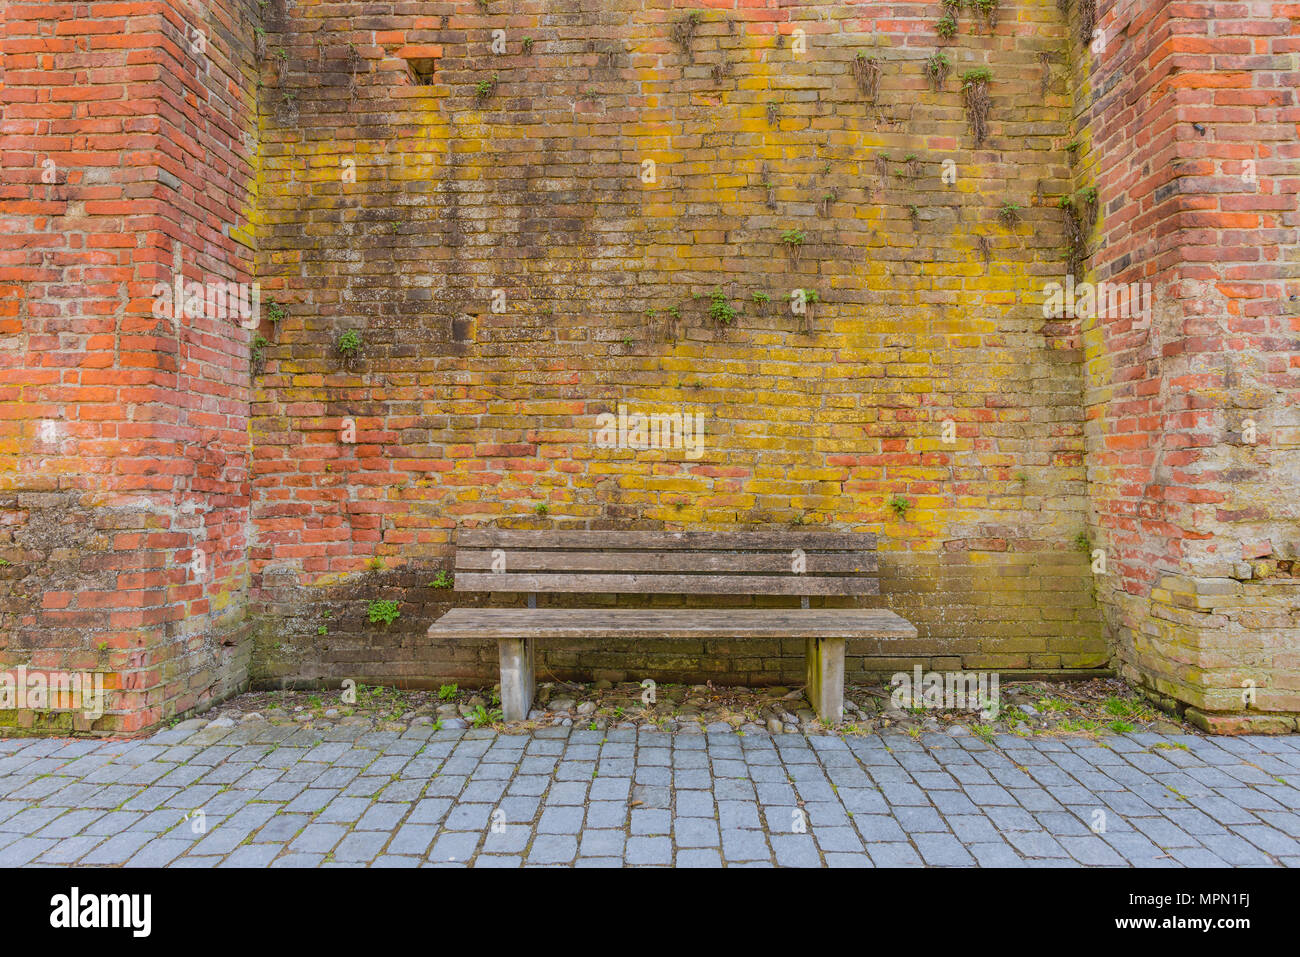 Germany, Bavaria, Memmingen, wooden bench and city wall Stock Photo